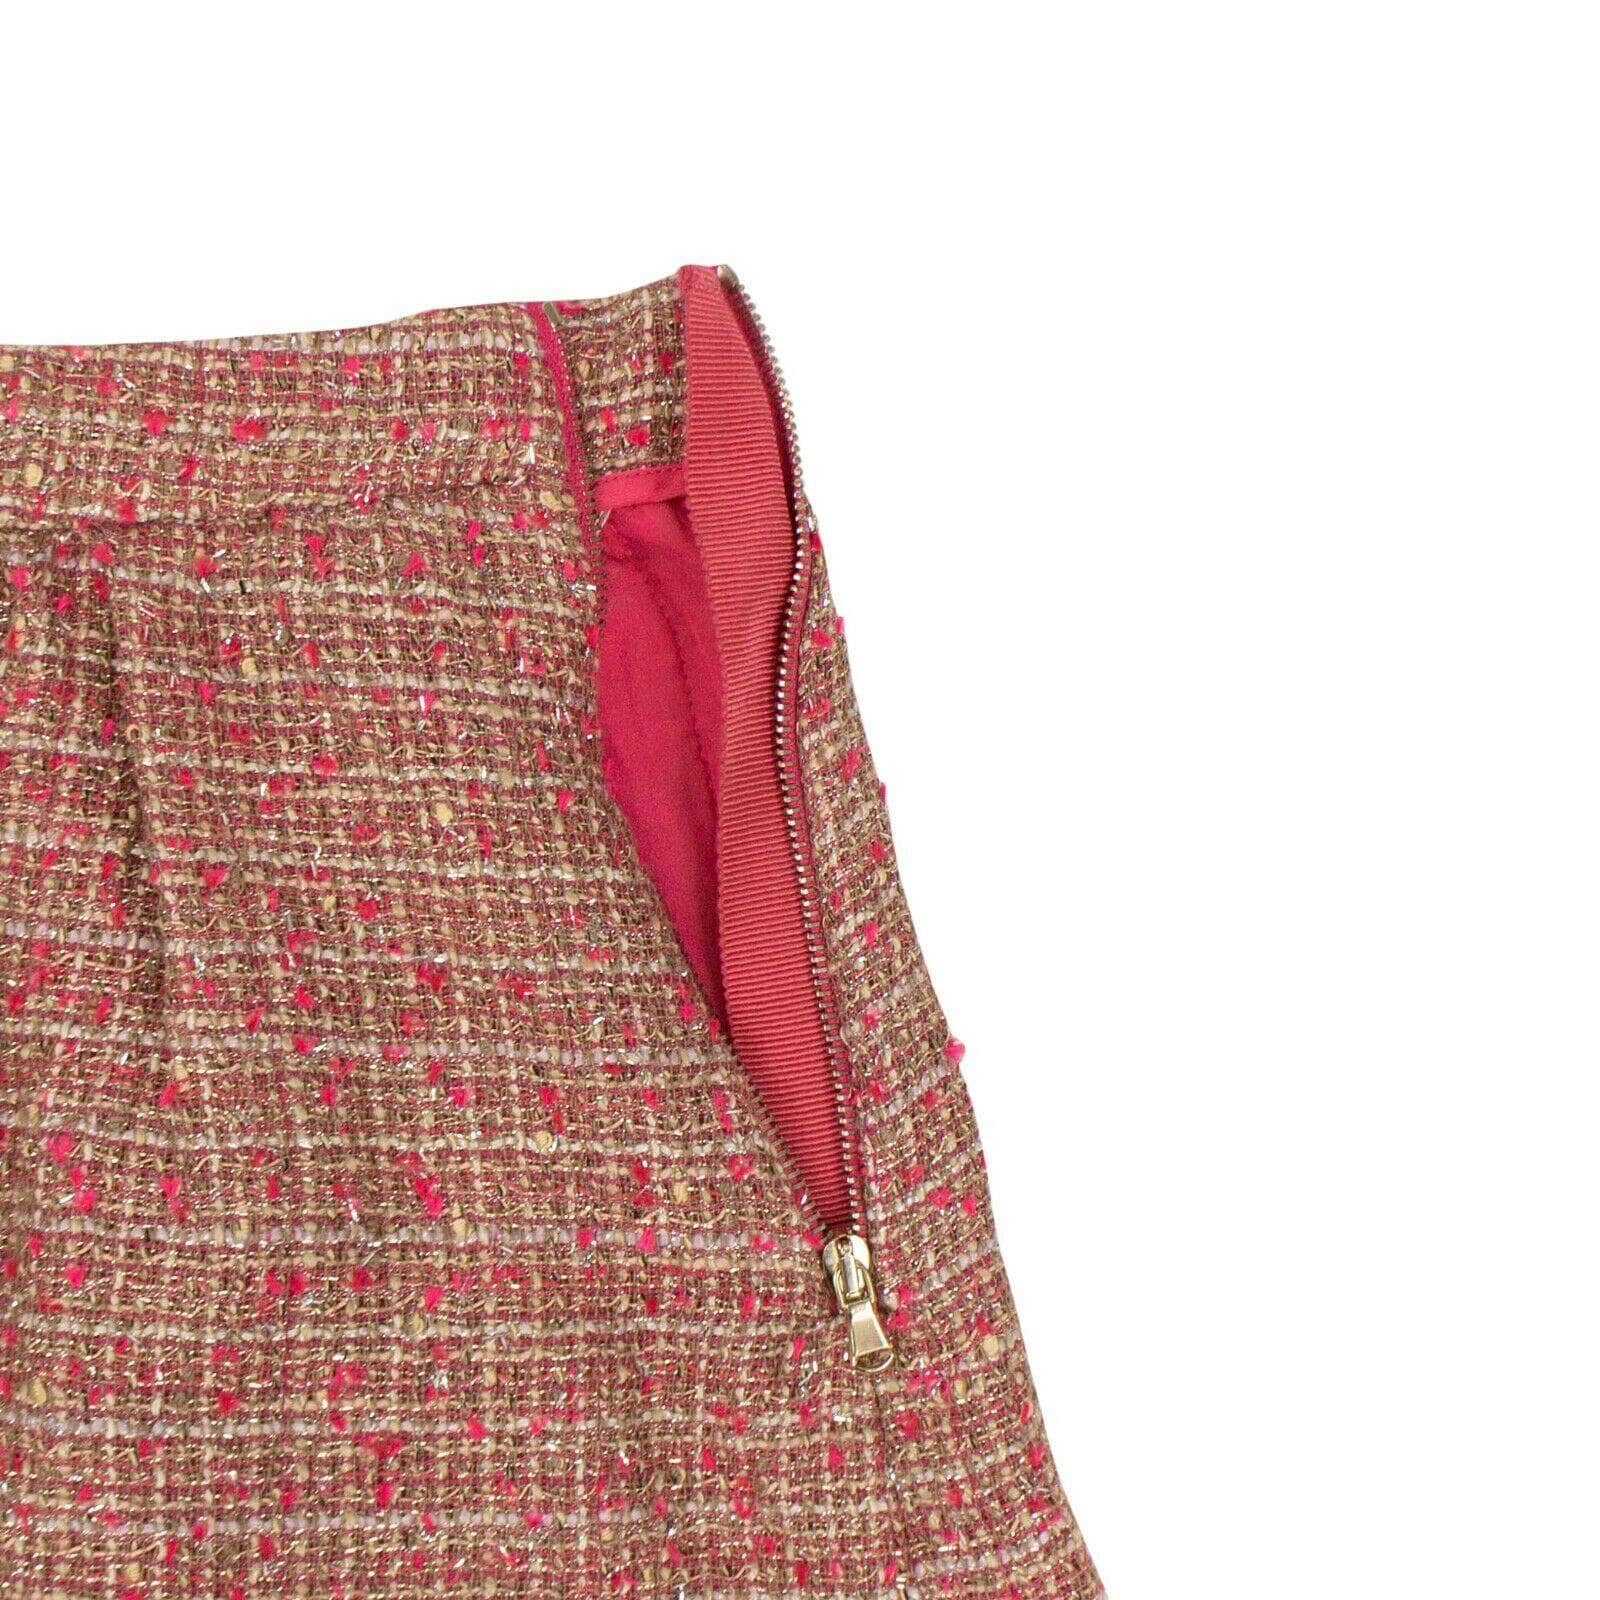 RED VALENTINO 250-500, size-46 46 Multi-Color Tweed Pleated Mini Skirt 67V-418/46 67V-418/46